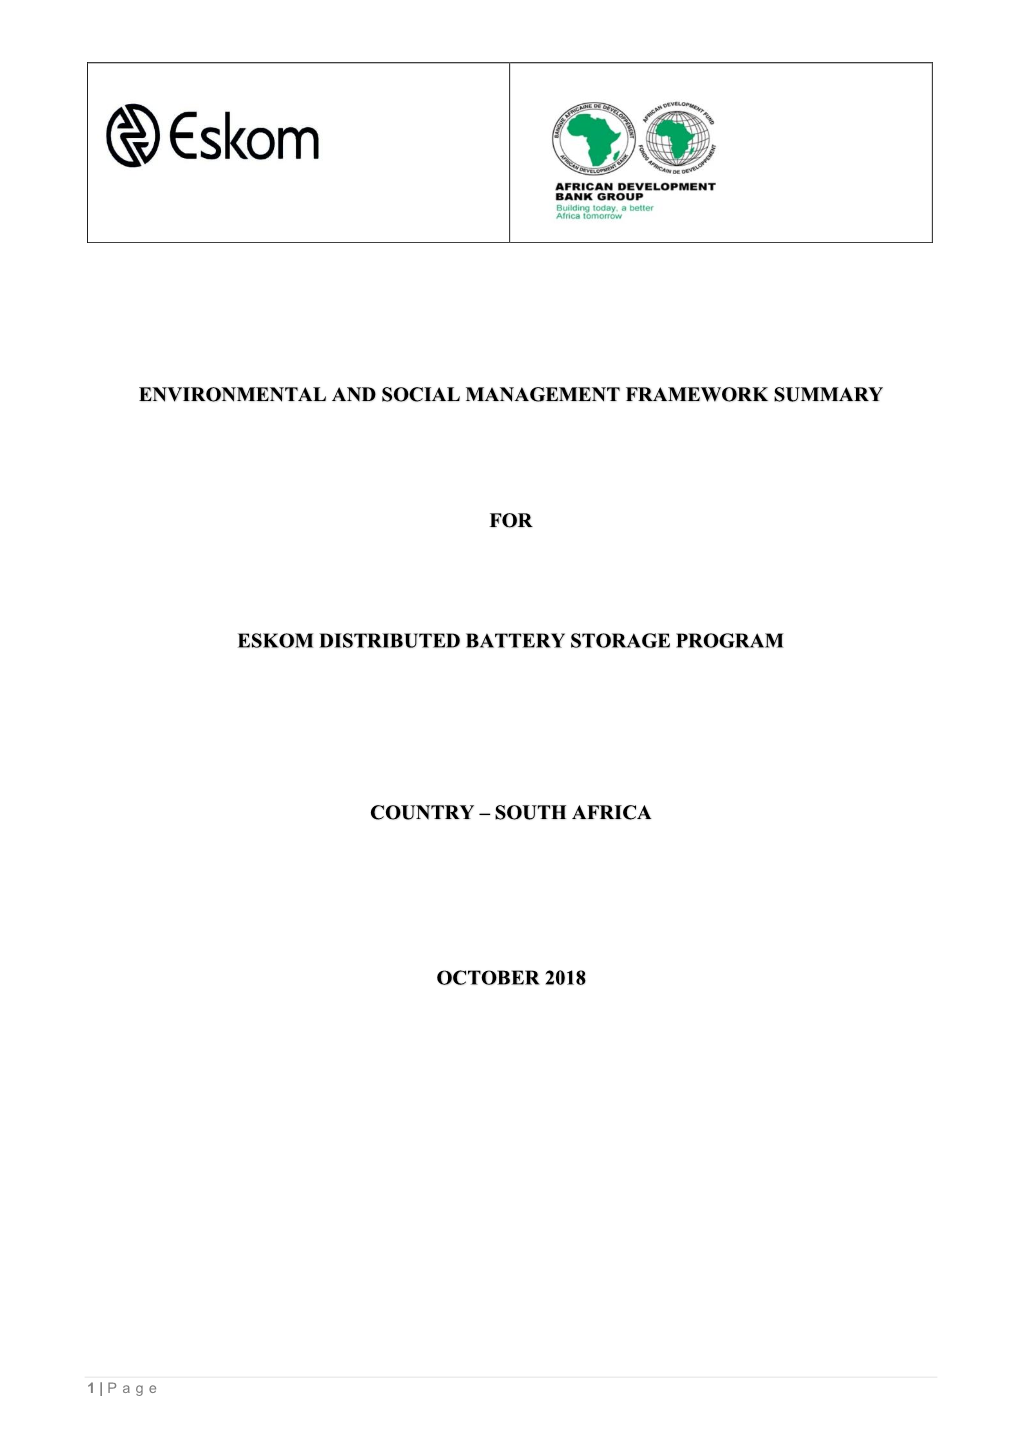 Environmental and Social Management Framework Summary